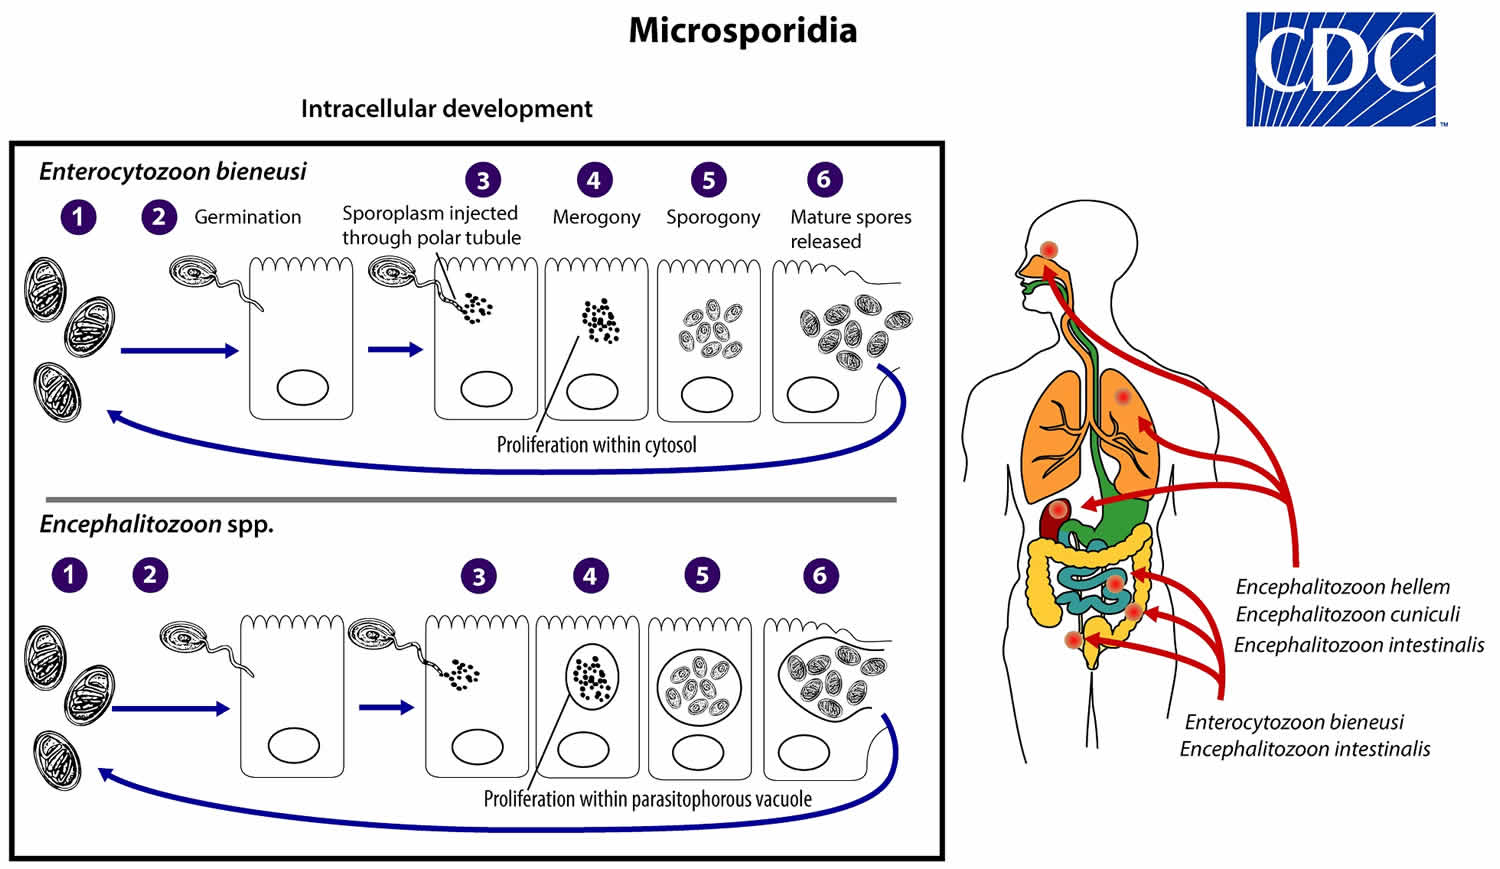 Microsporidia life cycle